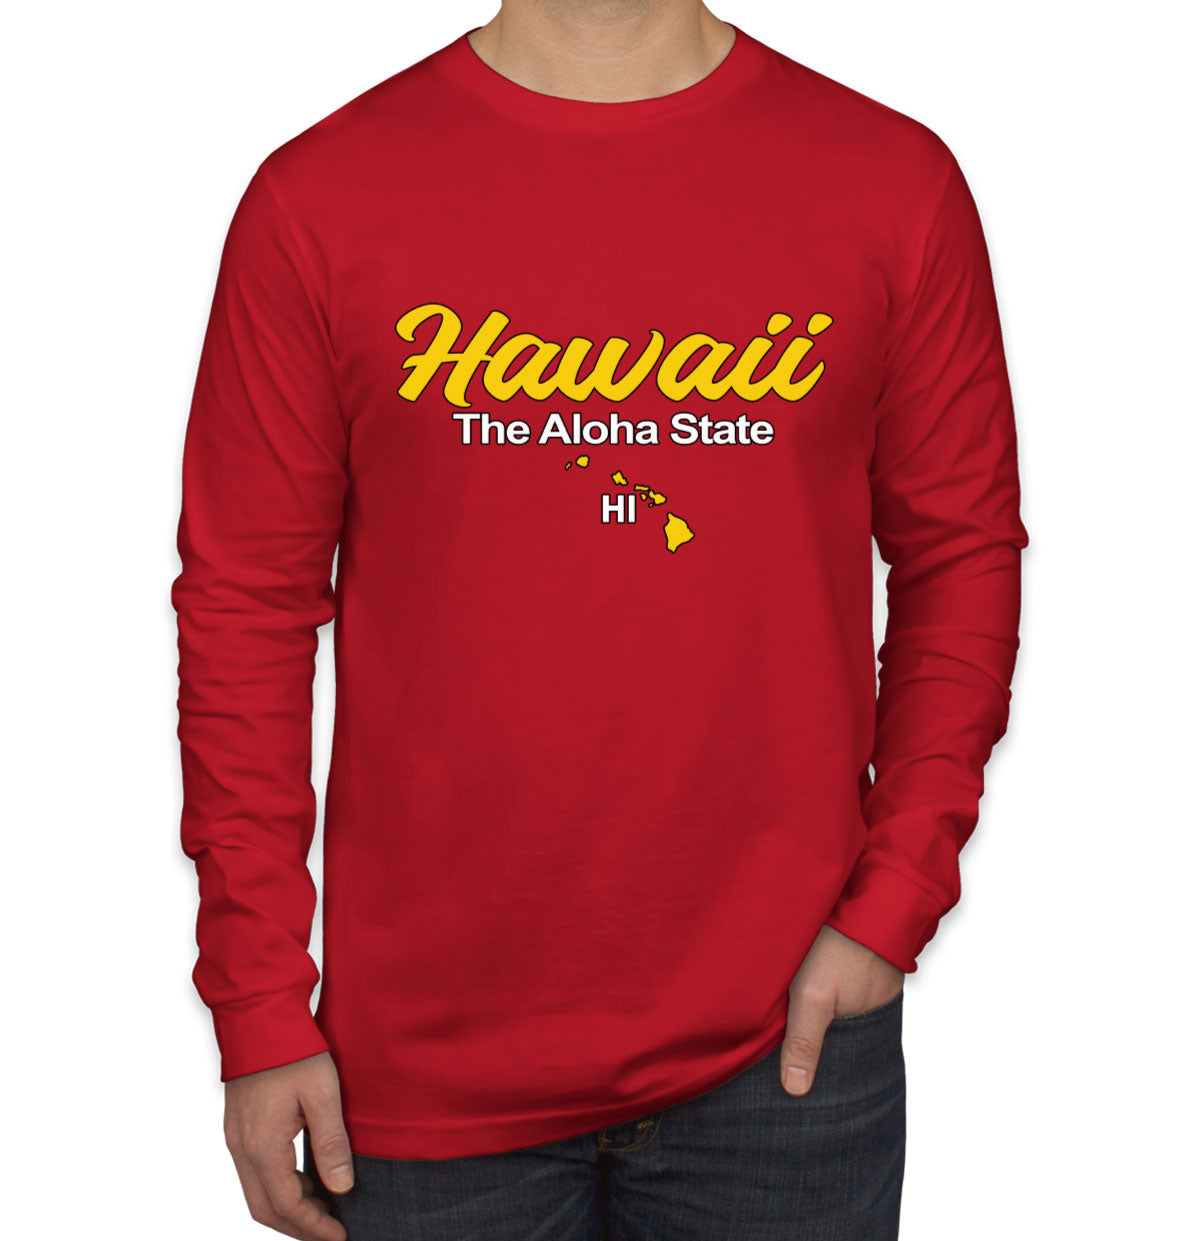 Hawaii The Aloha State Men's Long Sleeve Shirt